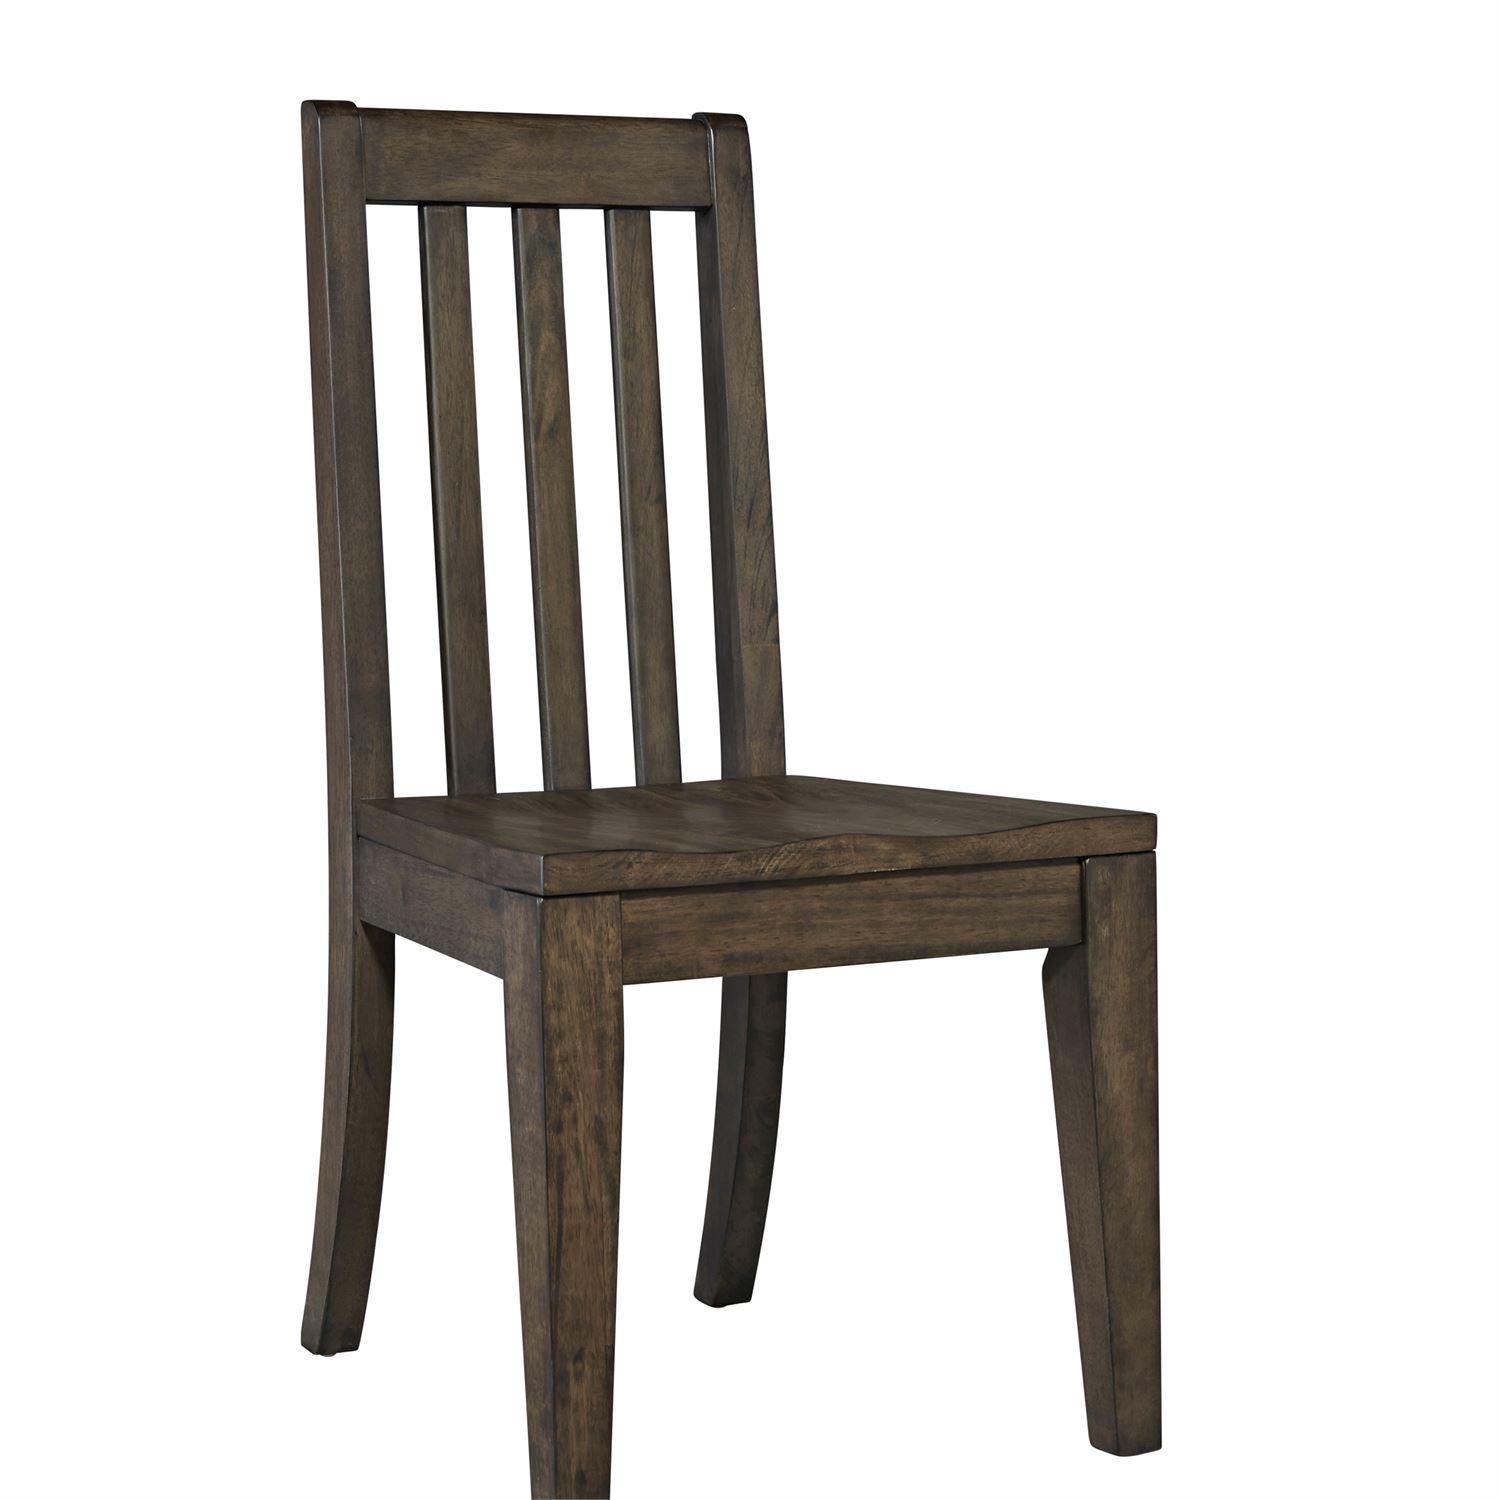   Thornwood Hills  (759-YBR) Dining Side Chair  